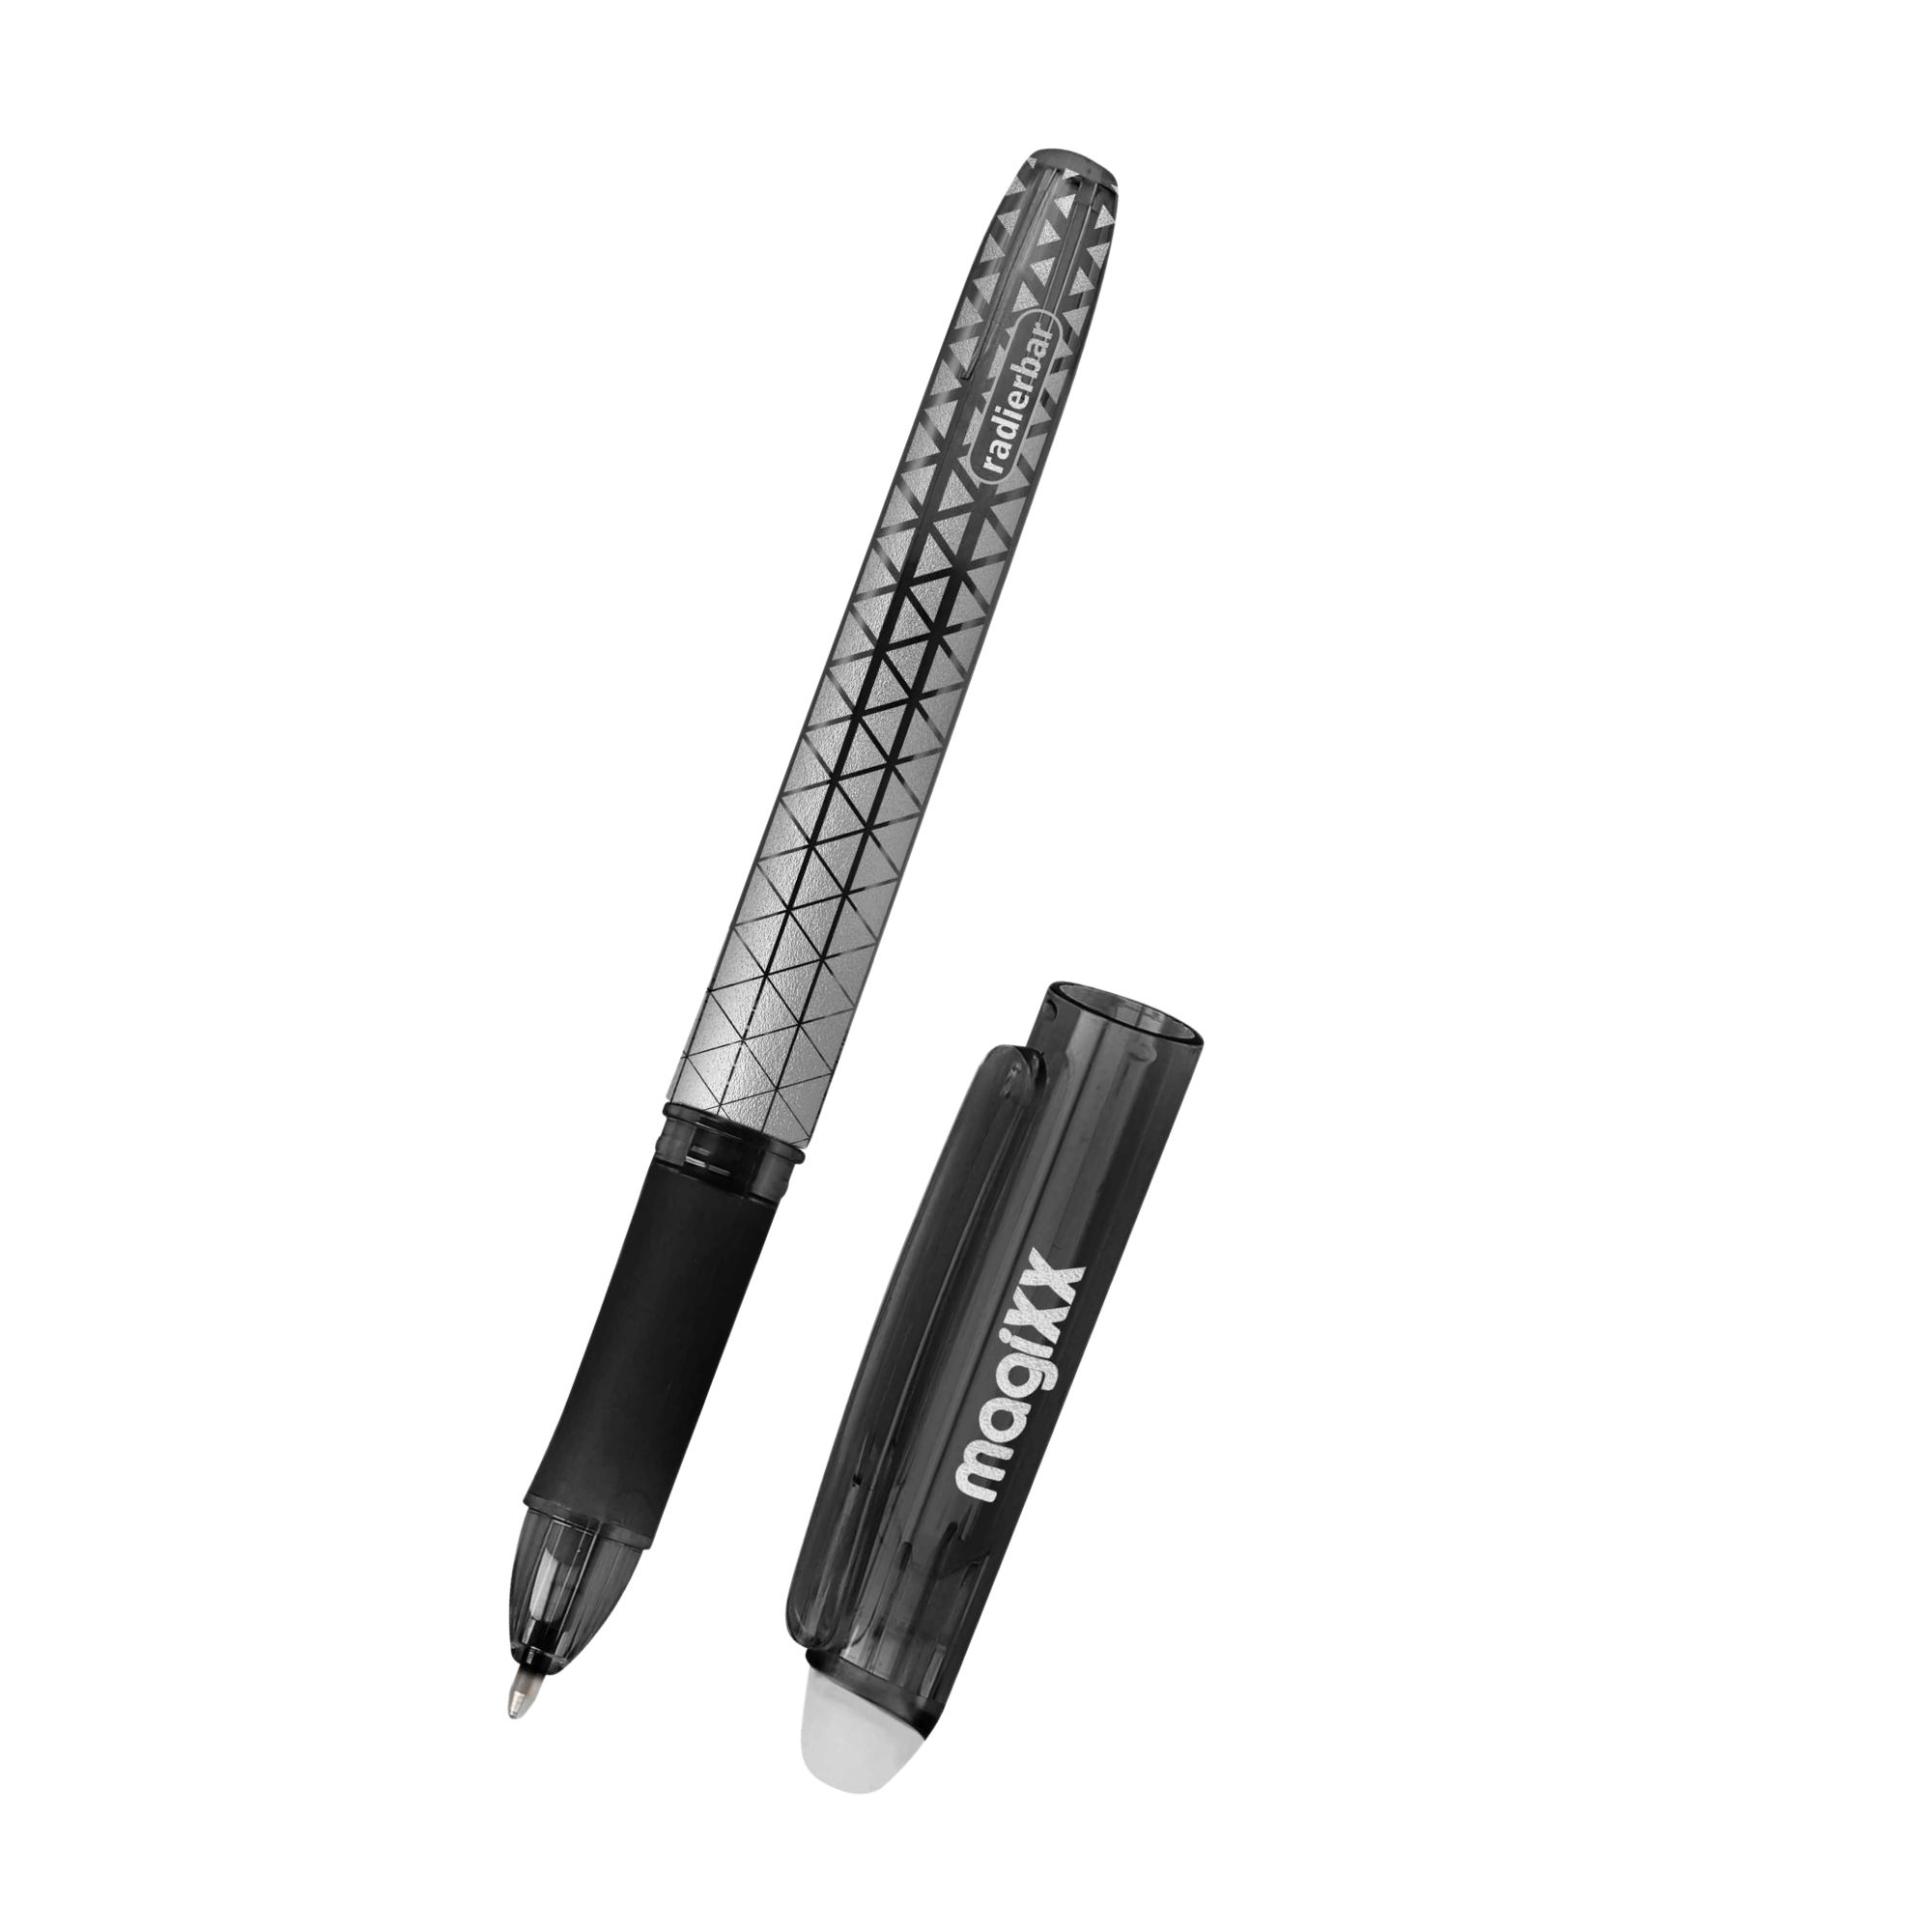 Erasable gel pen ONLINE magiXX Classic Black